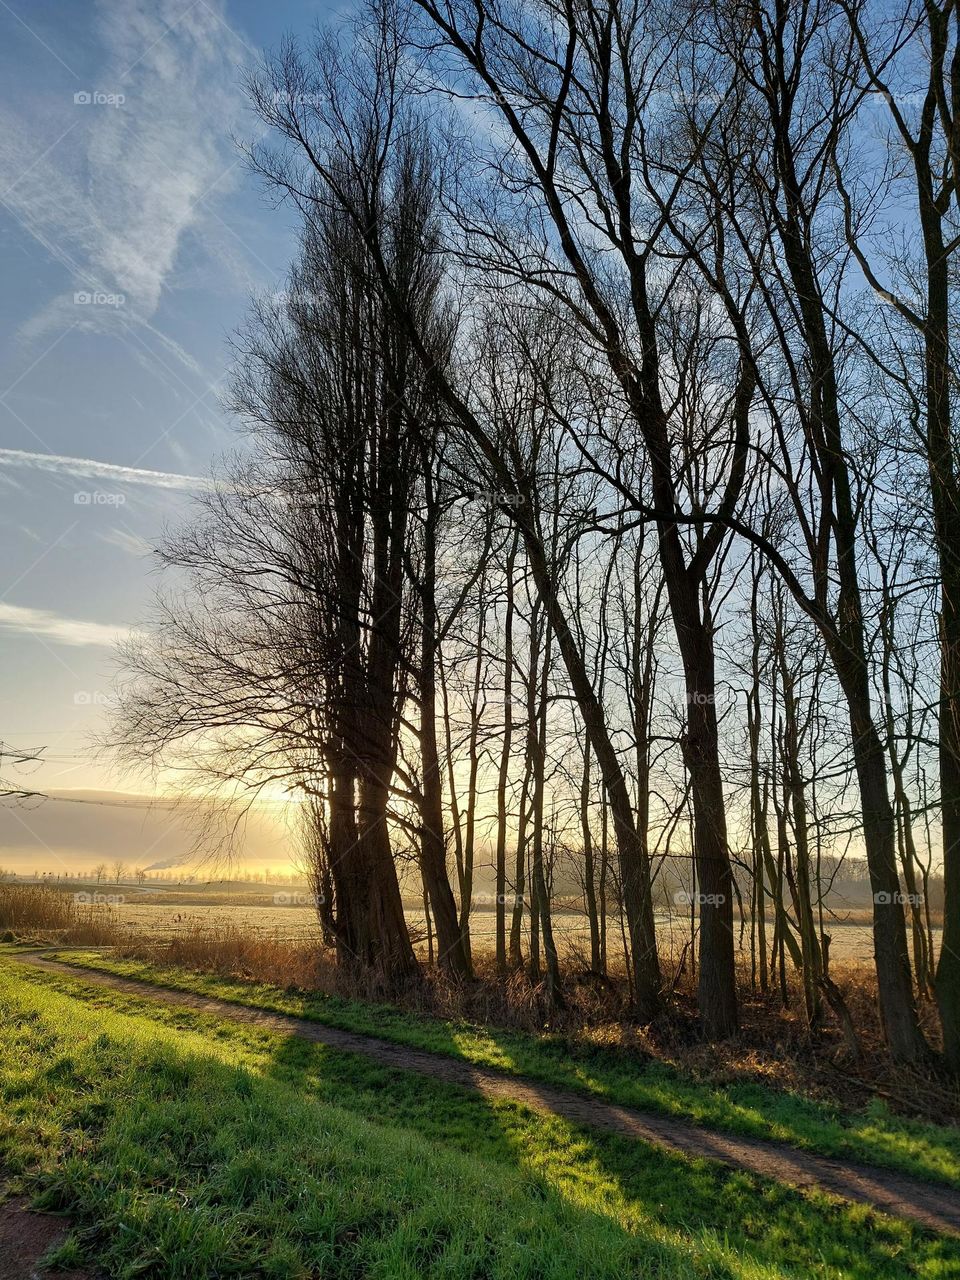 Winter morning in Dordrecht